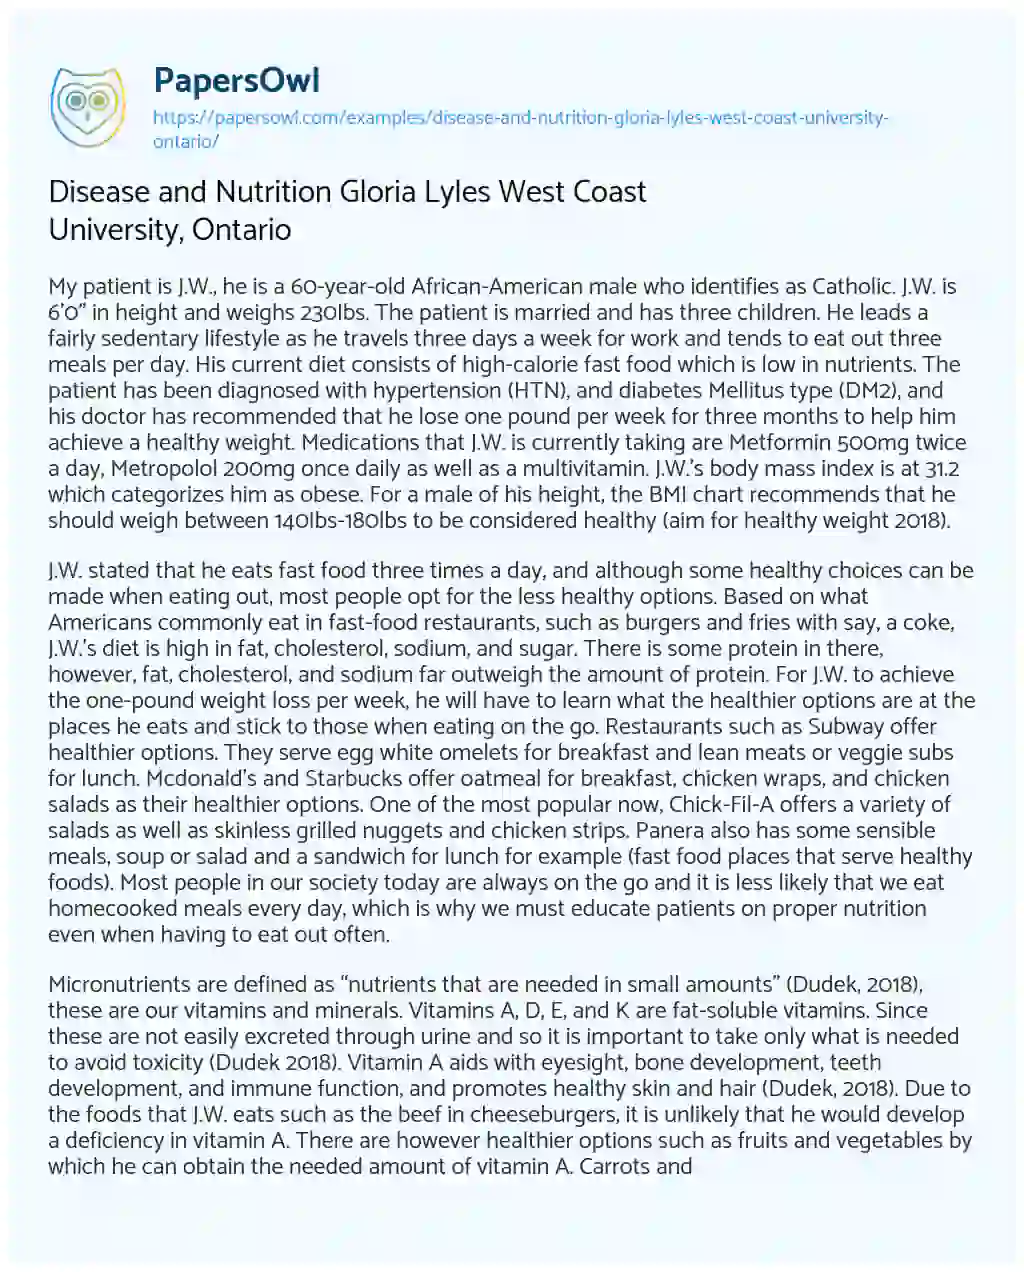 Disease and Nutrition Gloria Lyles West Coast University, Ontario essay